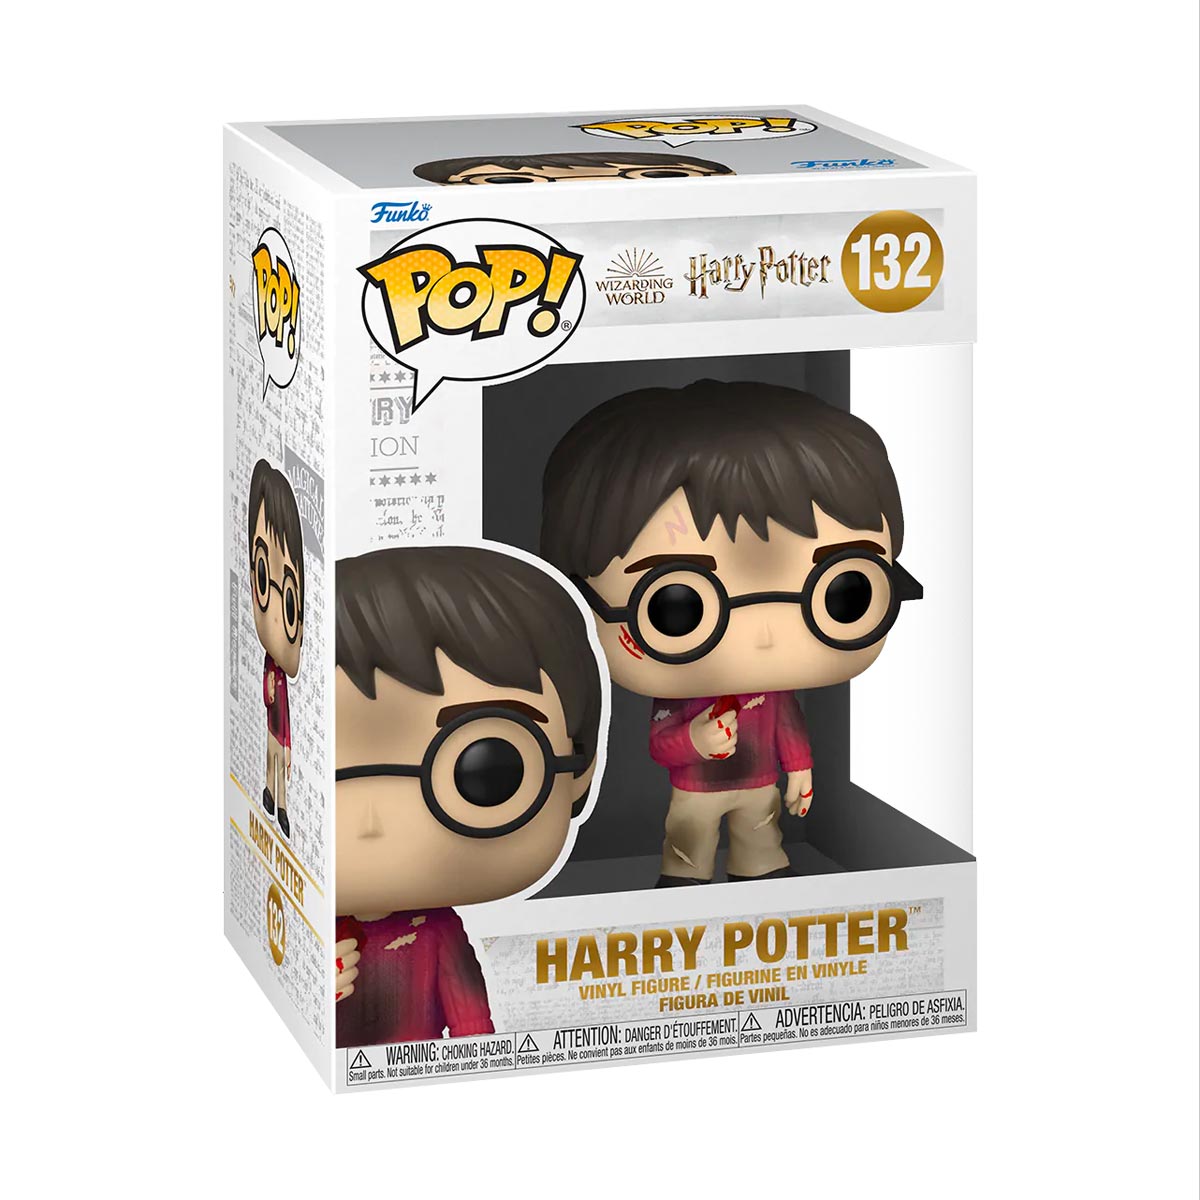 Funko Pop! 132 Harry Potter [Harry Potter]